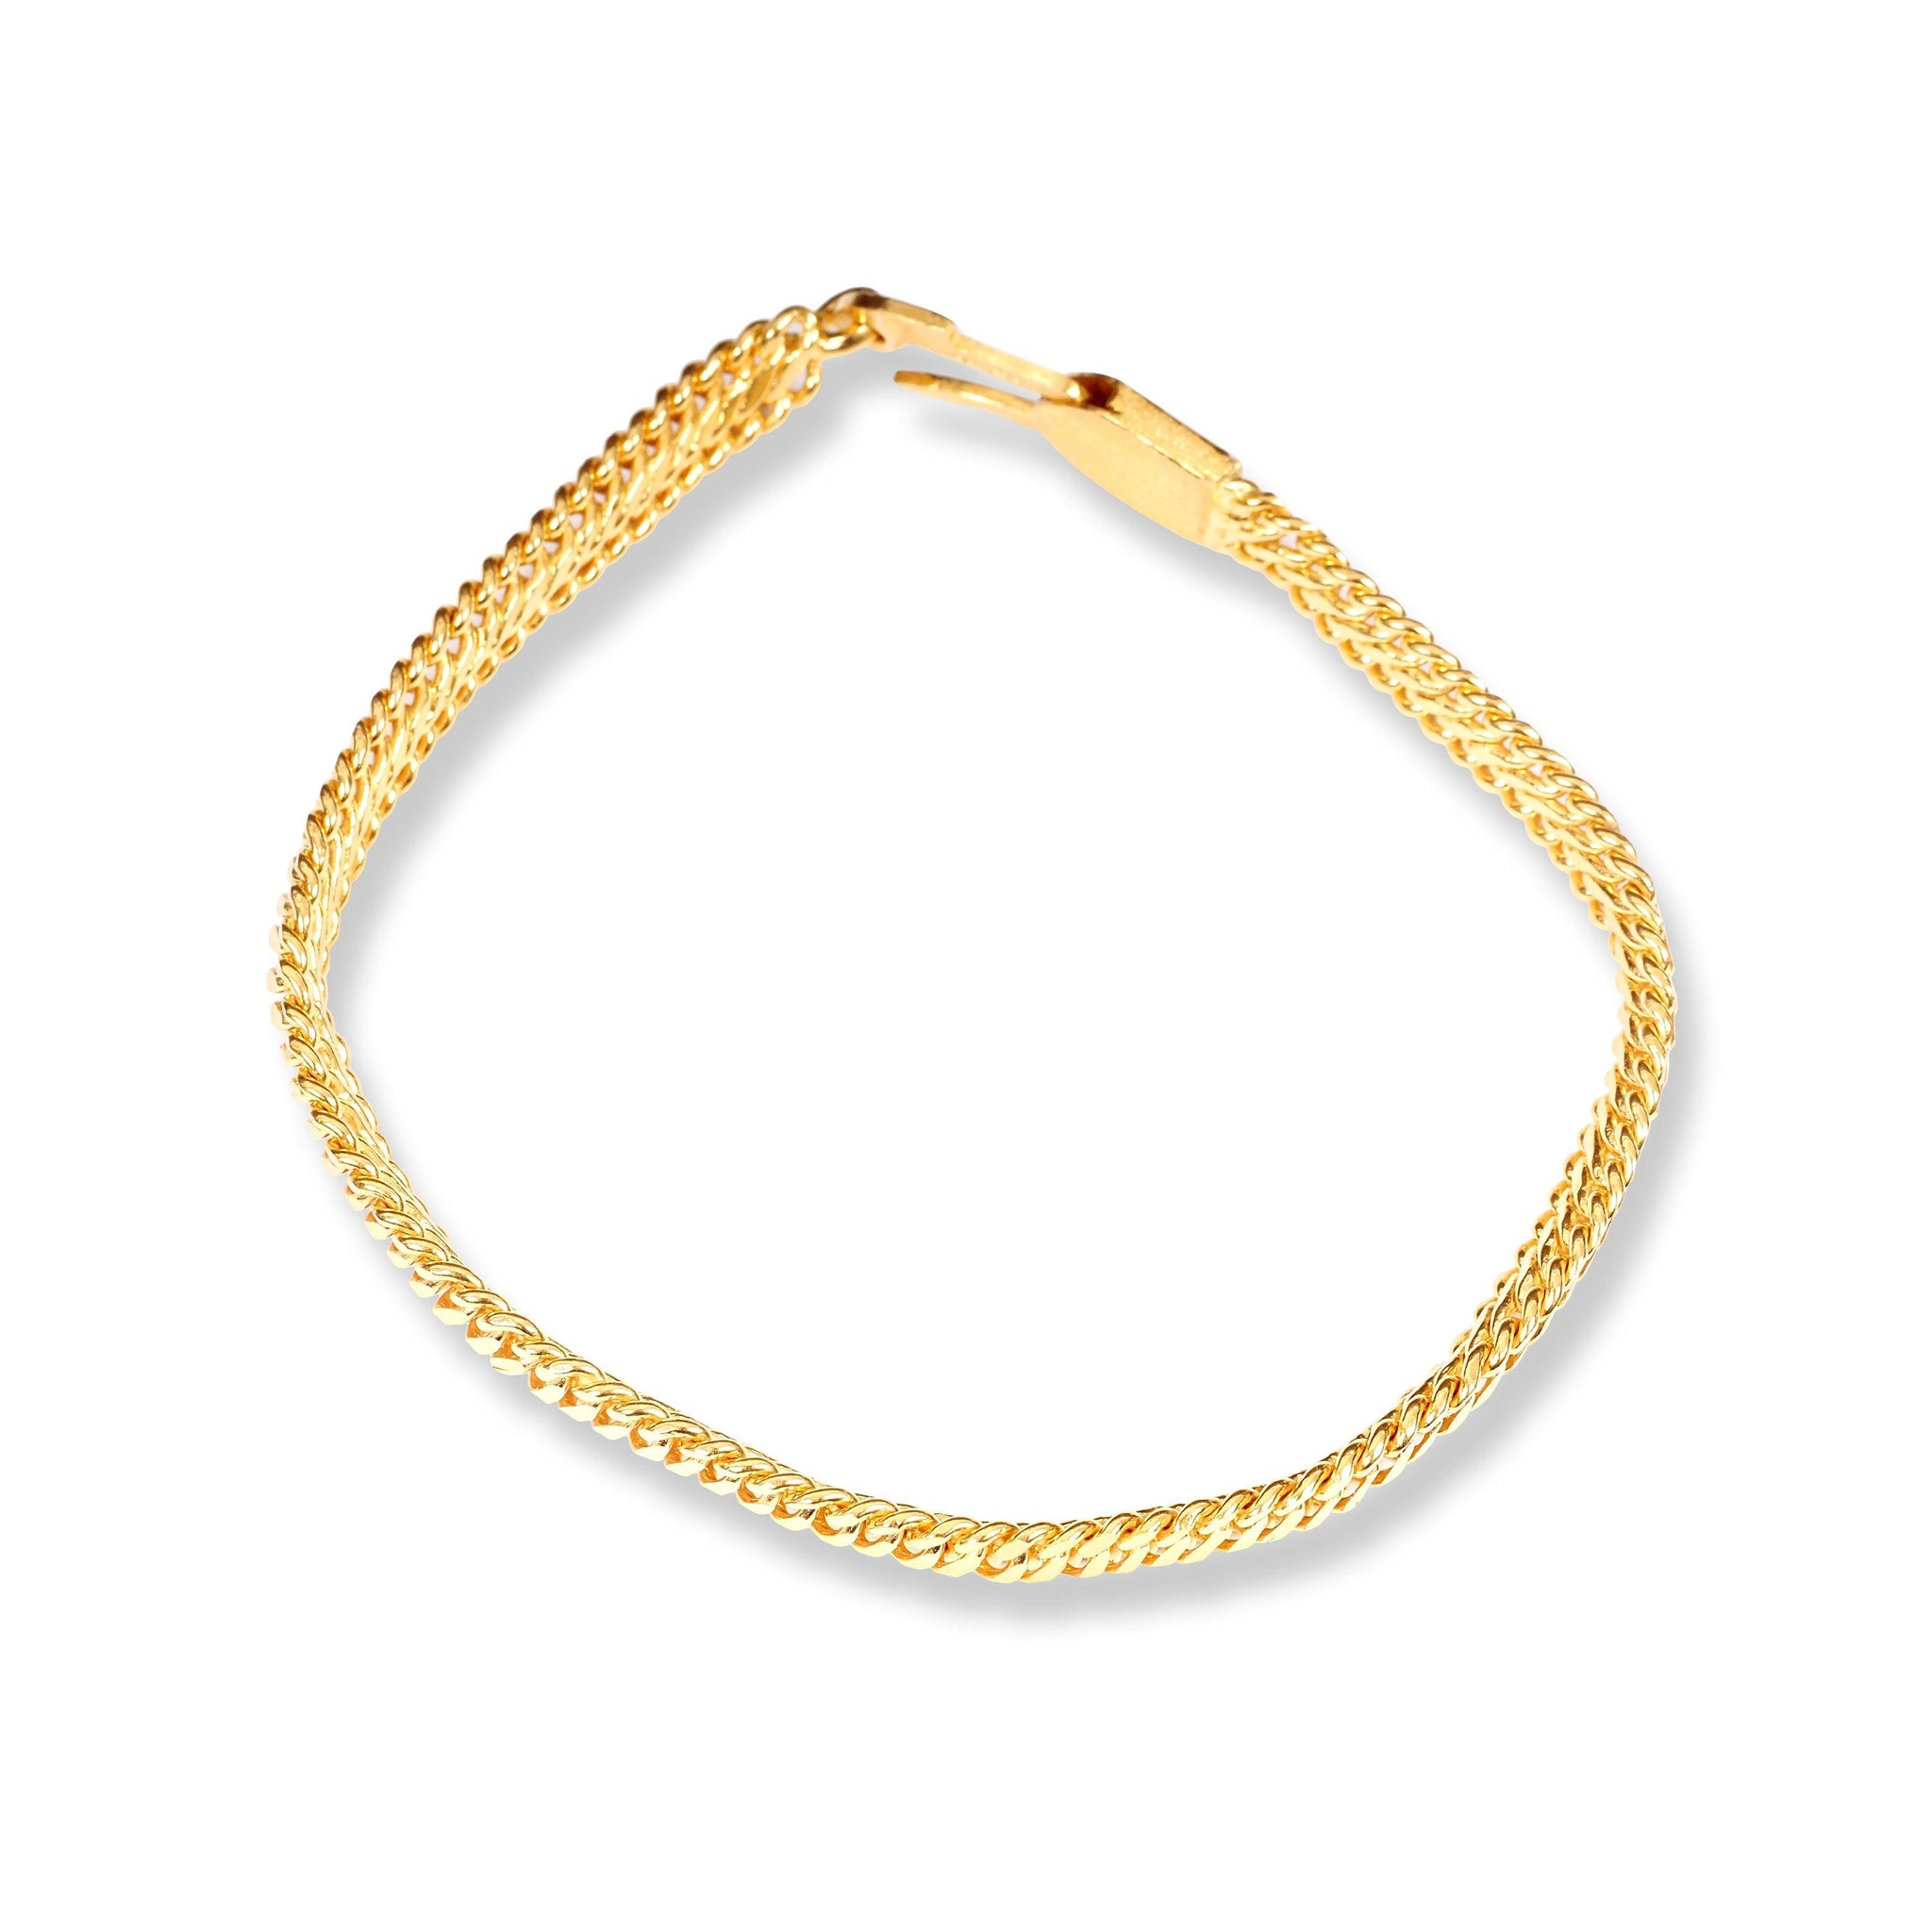 22ct Gold Gents Bracelet with U Push Clasp GBR-8325